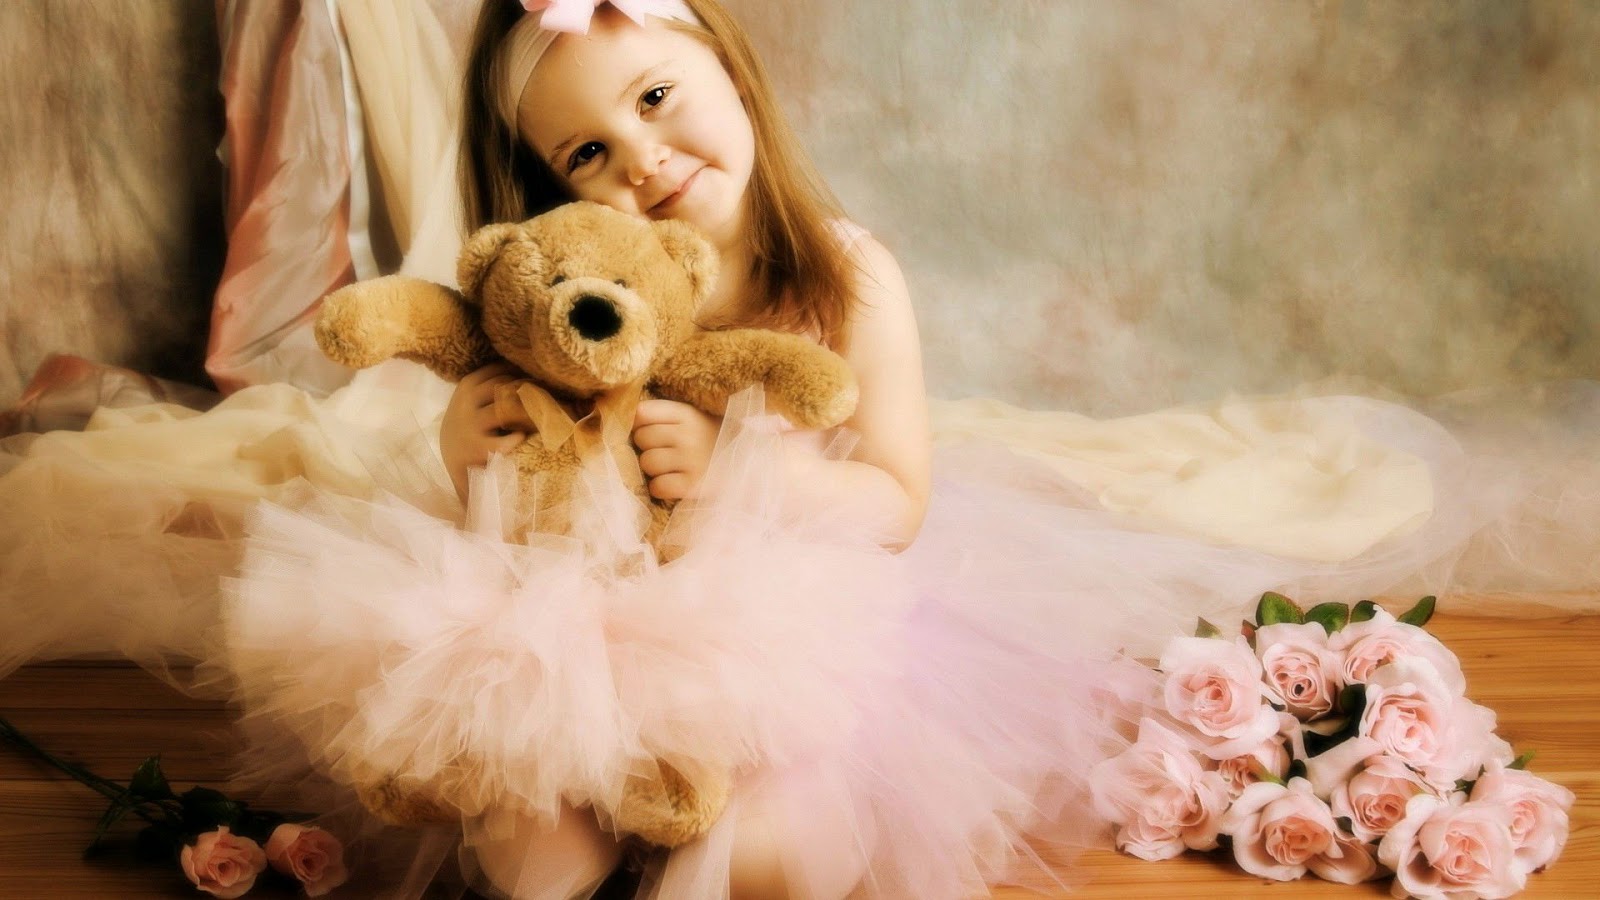 fb wallpaper,teddy bear,toy,pink,doll,stuffed toy